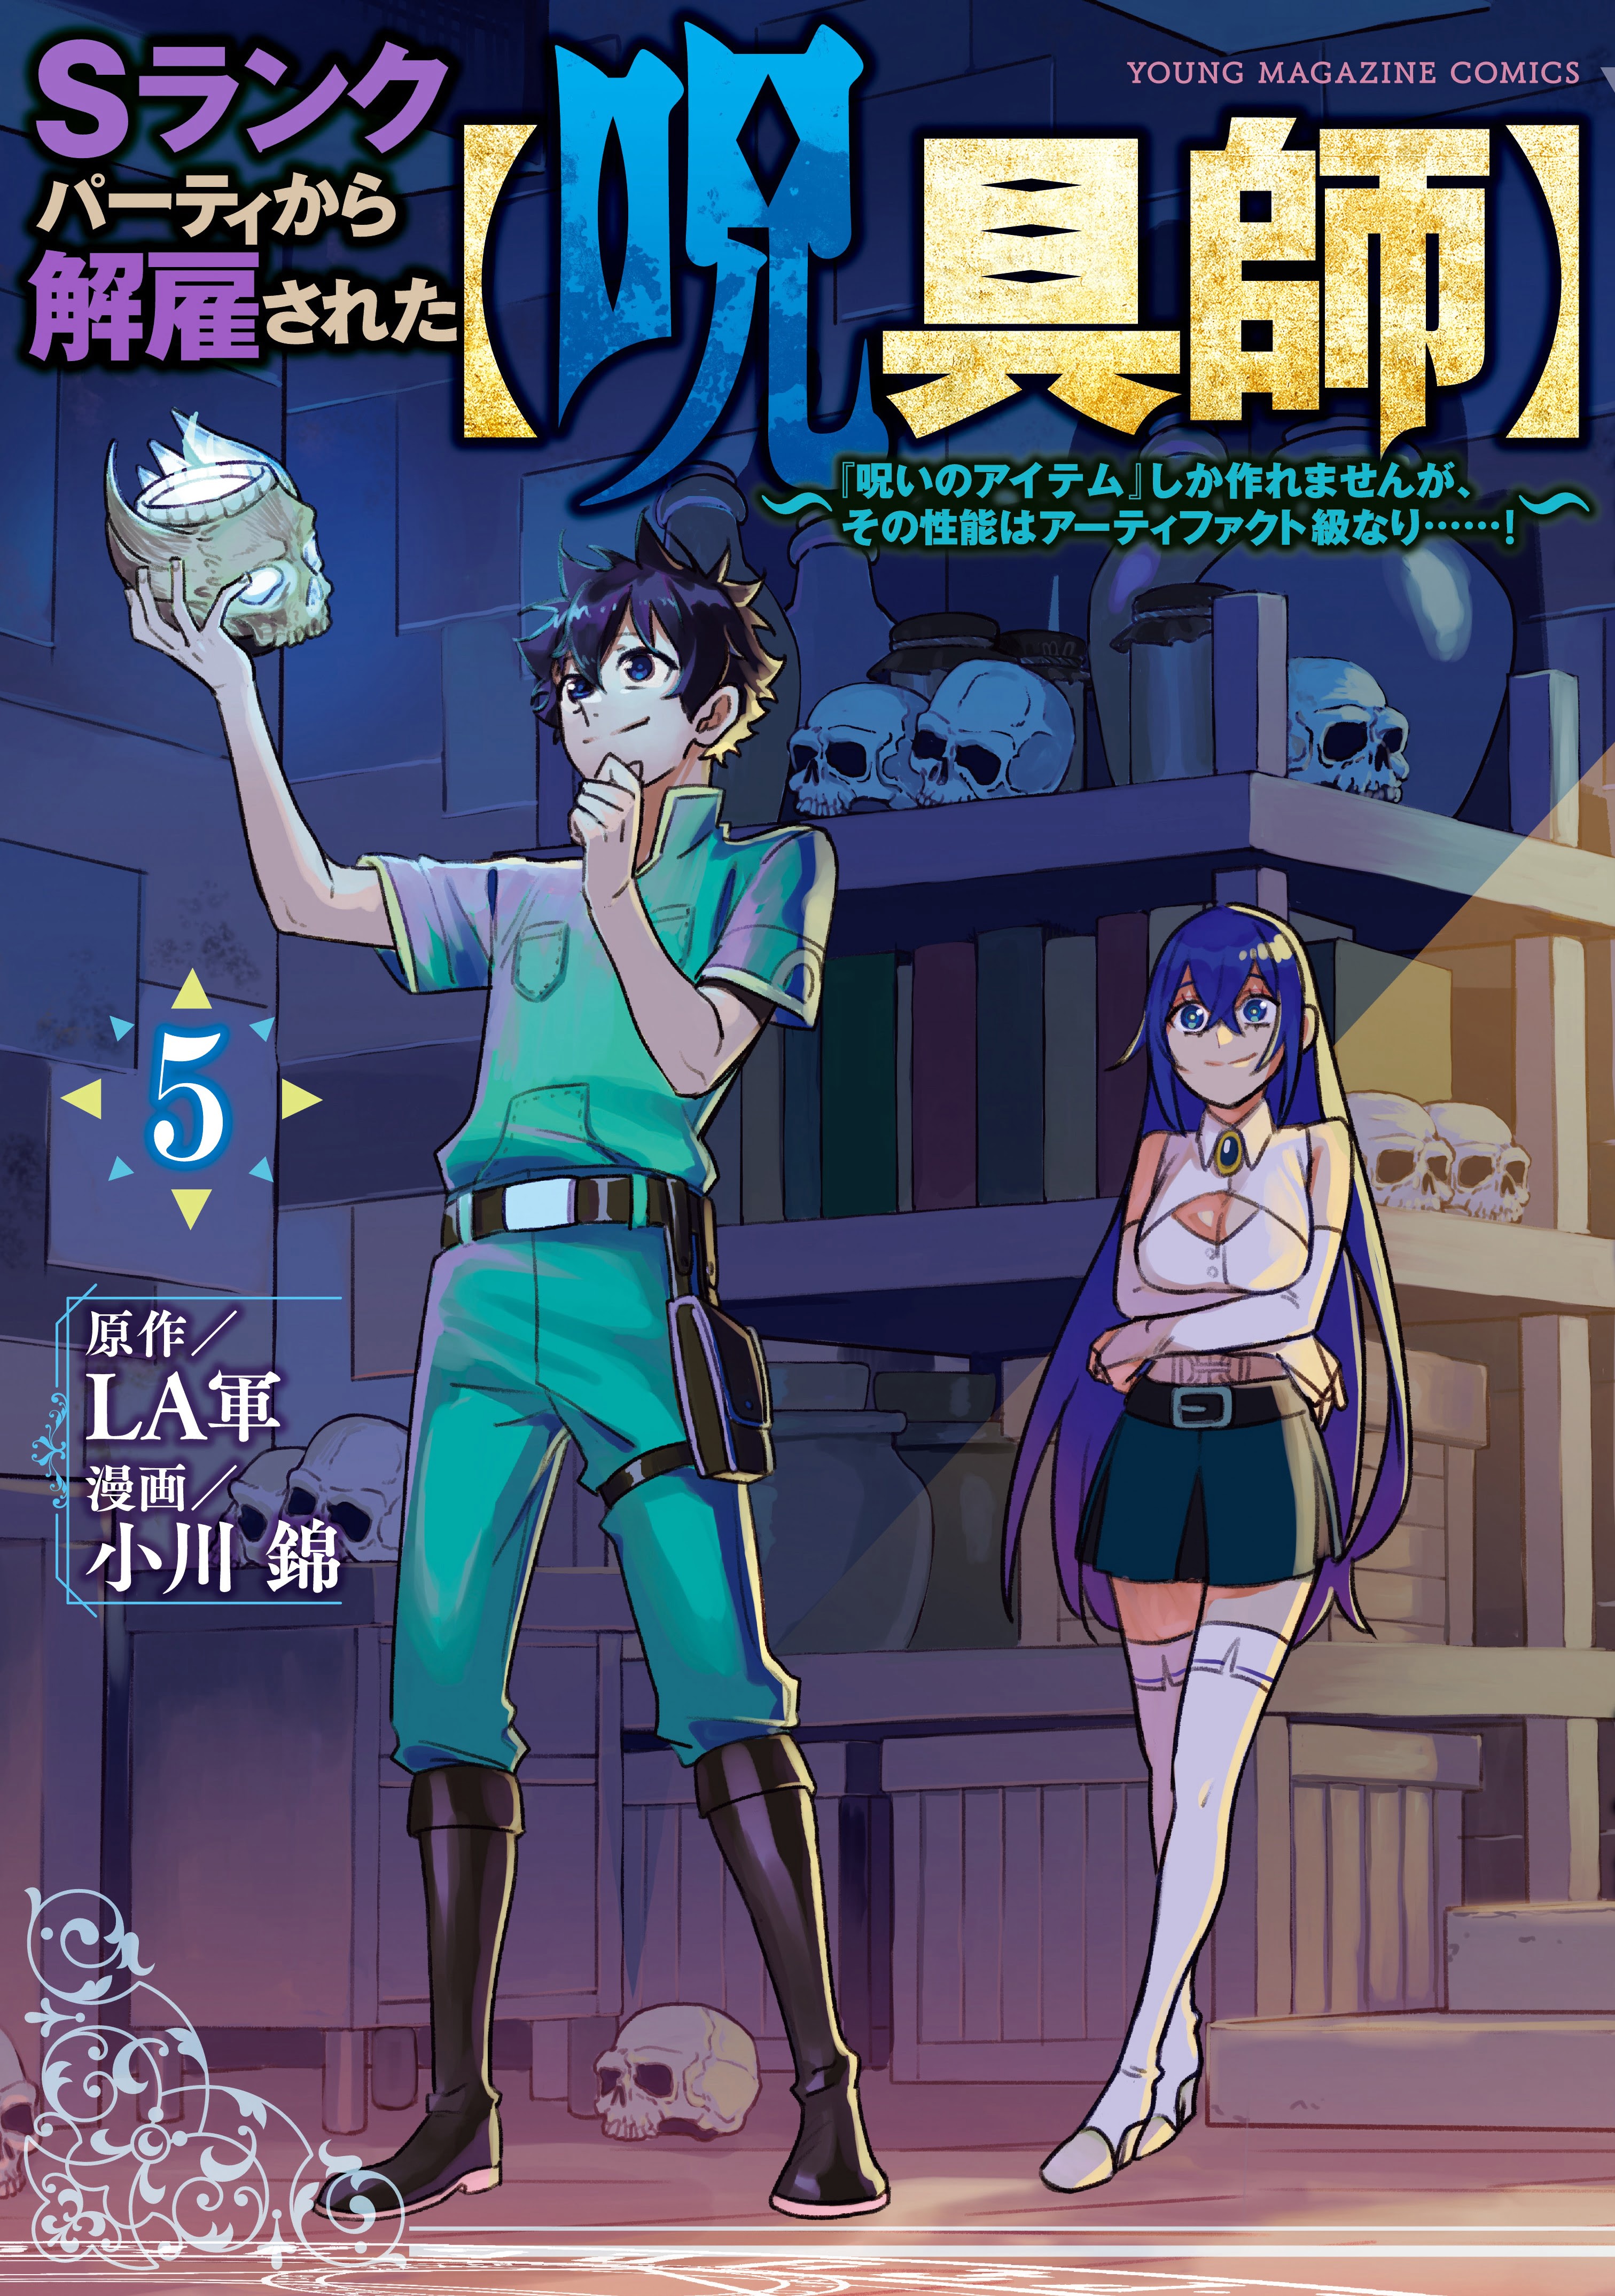 This spinoff manga is cursed : r/ClassroomOfTheElite